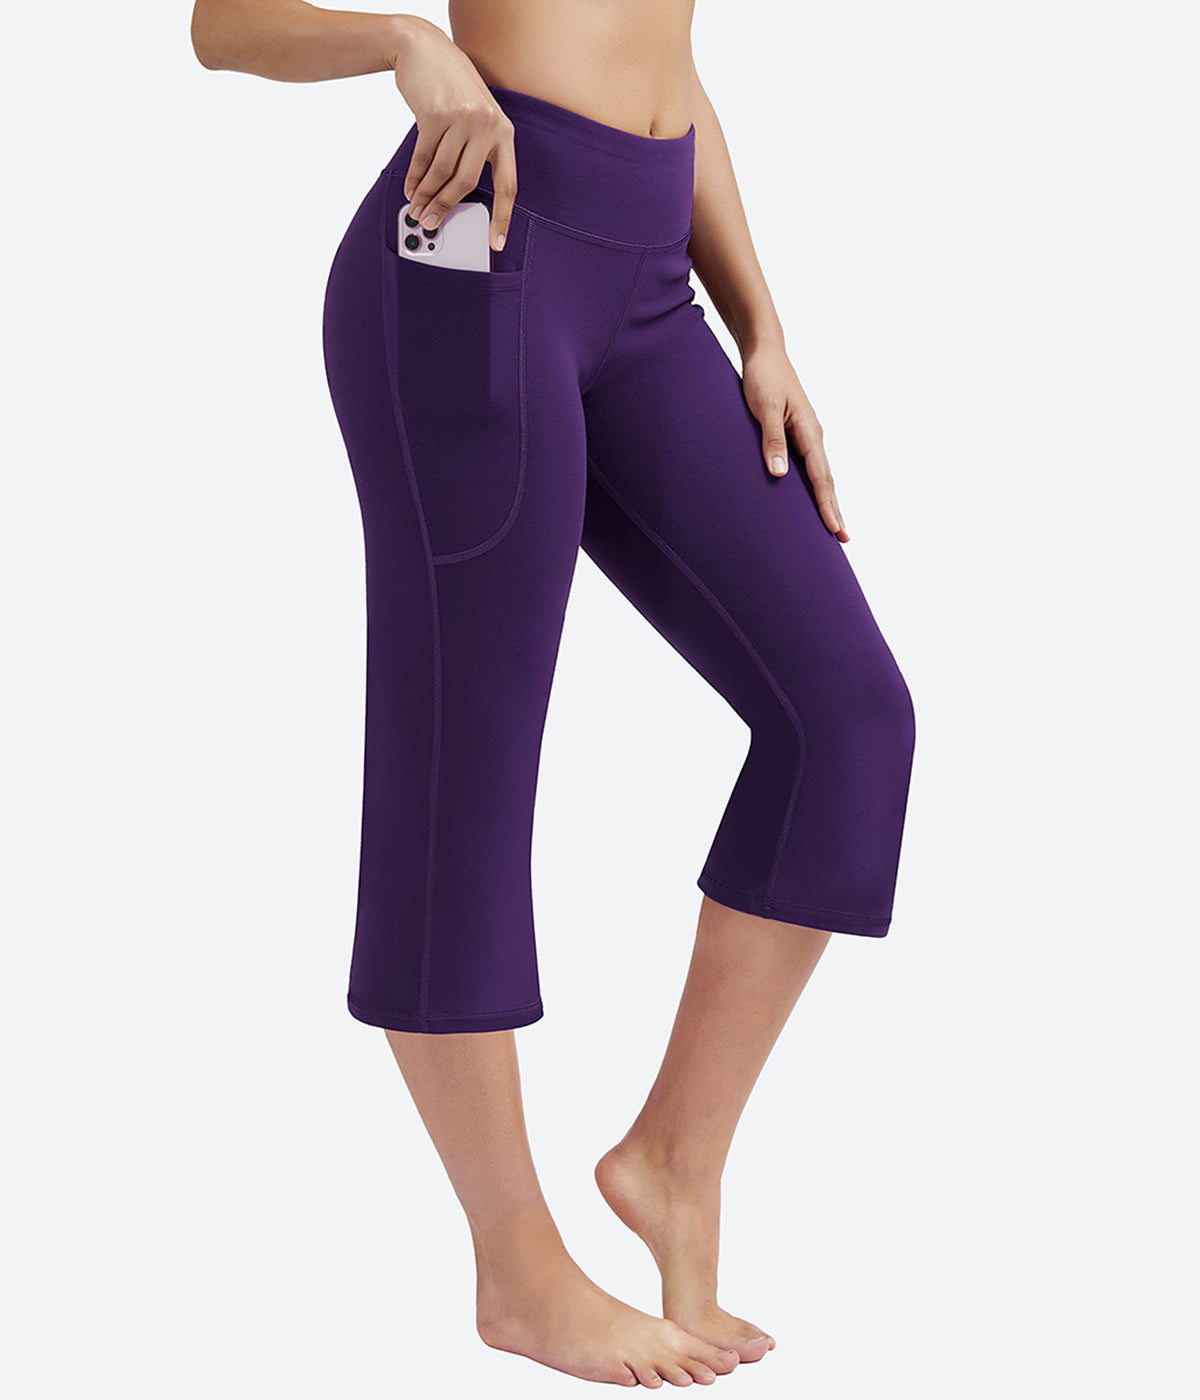 Flower Power Yoga Capri Leggings Fun Yoga Pants Paddleboard Pants  Loungewear Feel Good and Look Good in These Super Comfy Pants 